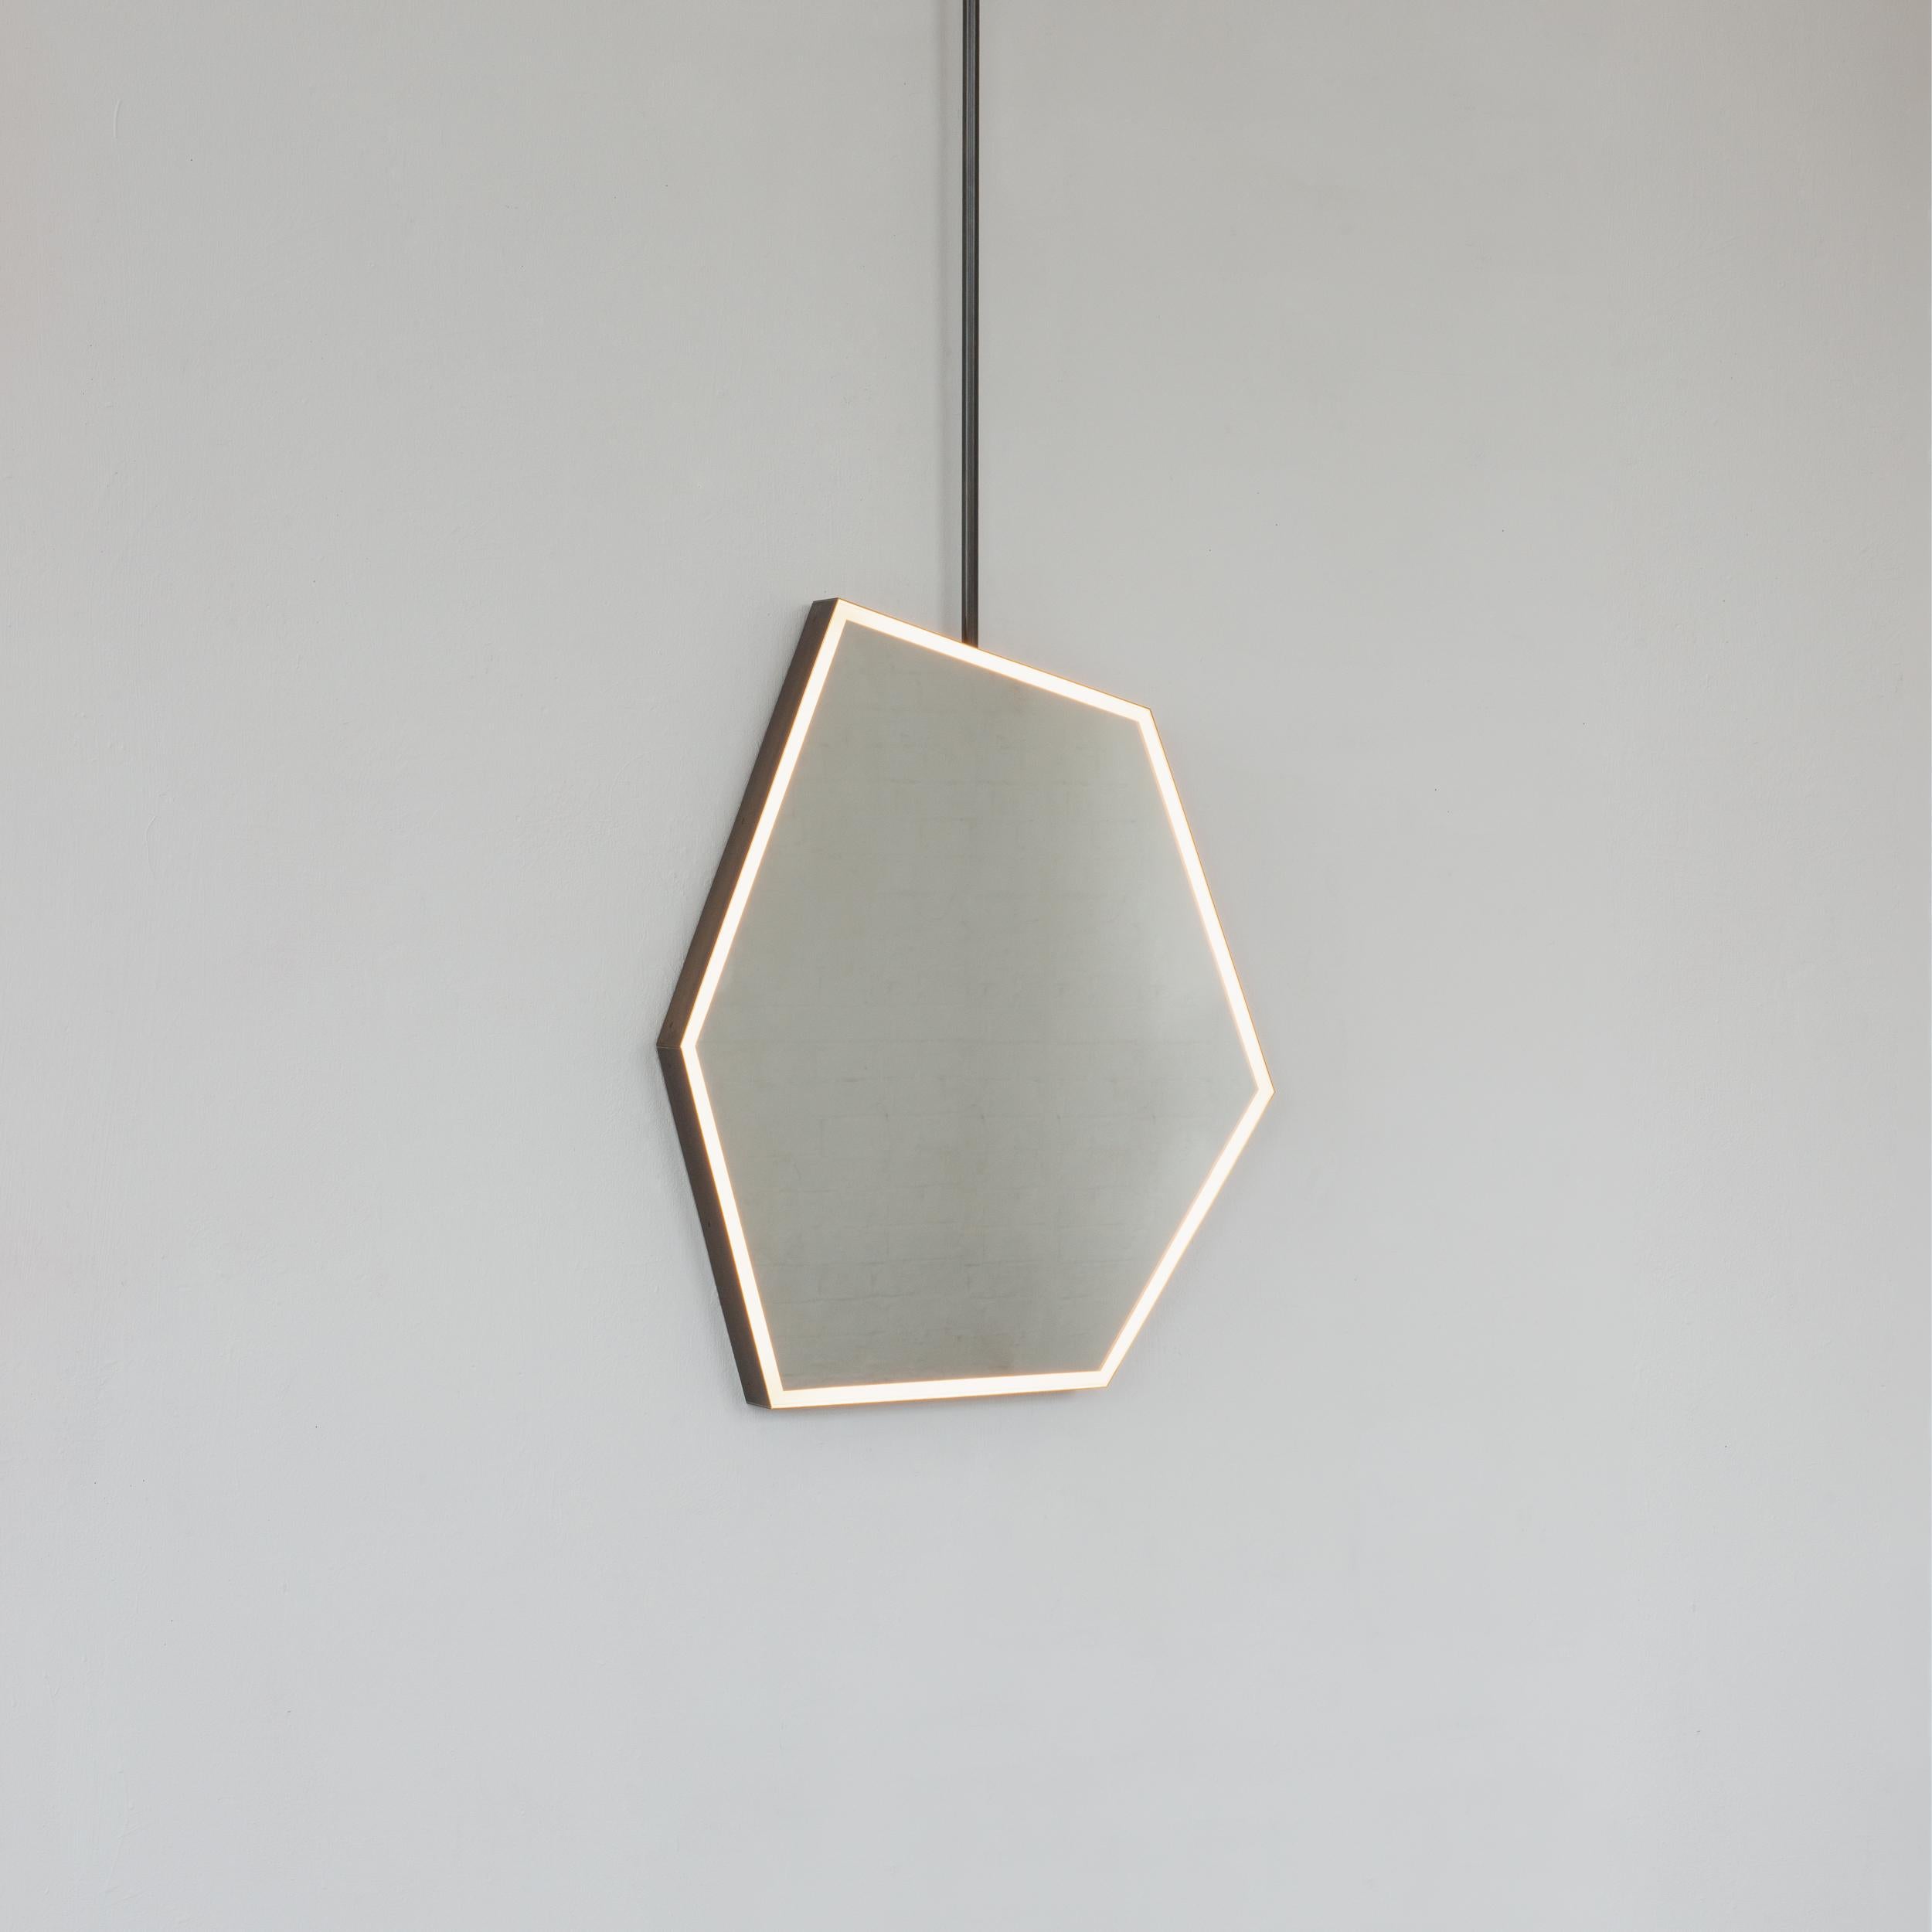 Illuminated Irregular Hexagonal Suspended Mirror, Patina Frame, Sensor Switch For Sale 3